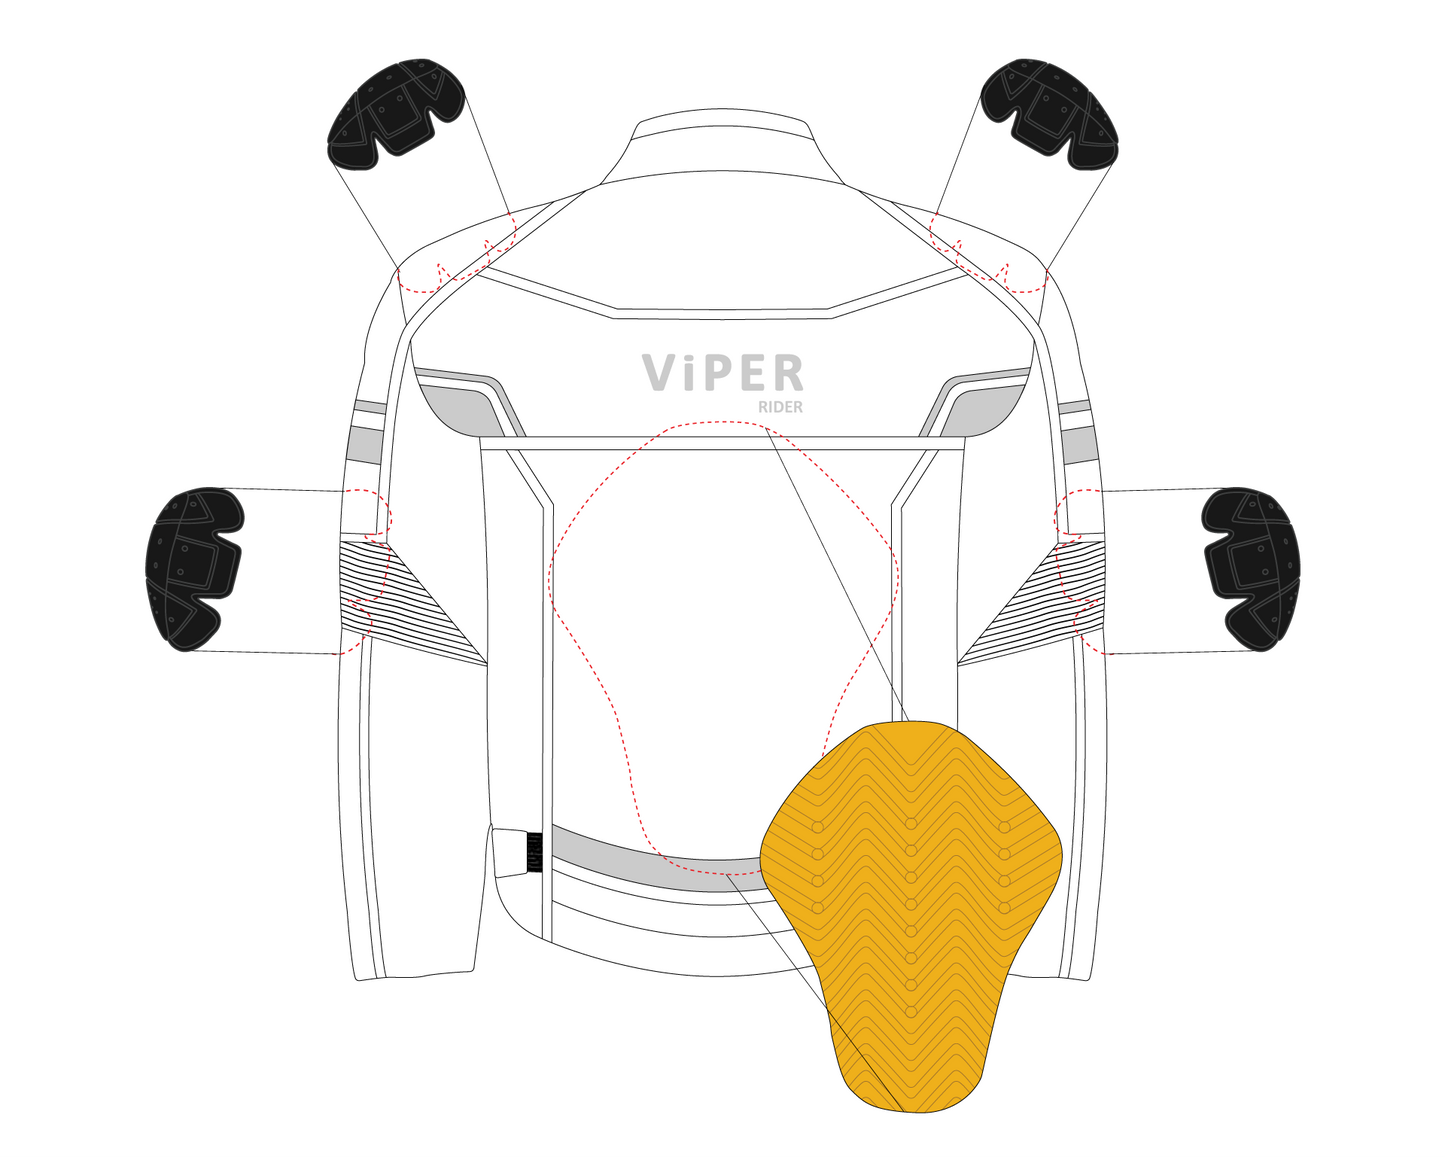 Viper Reflex Jacket Black